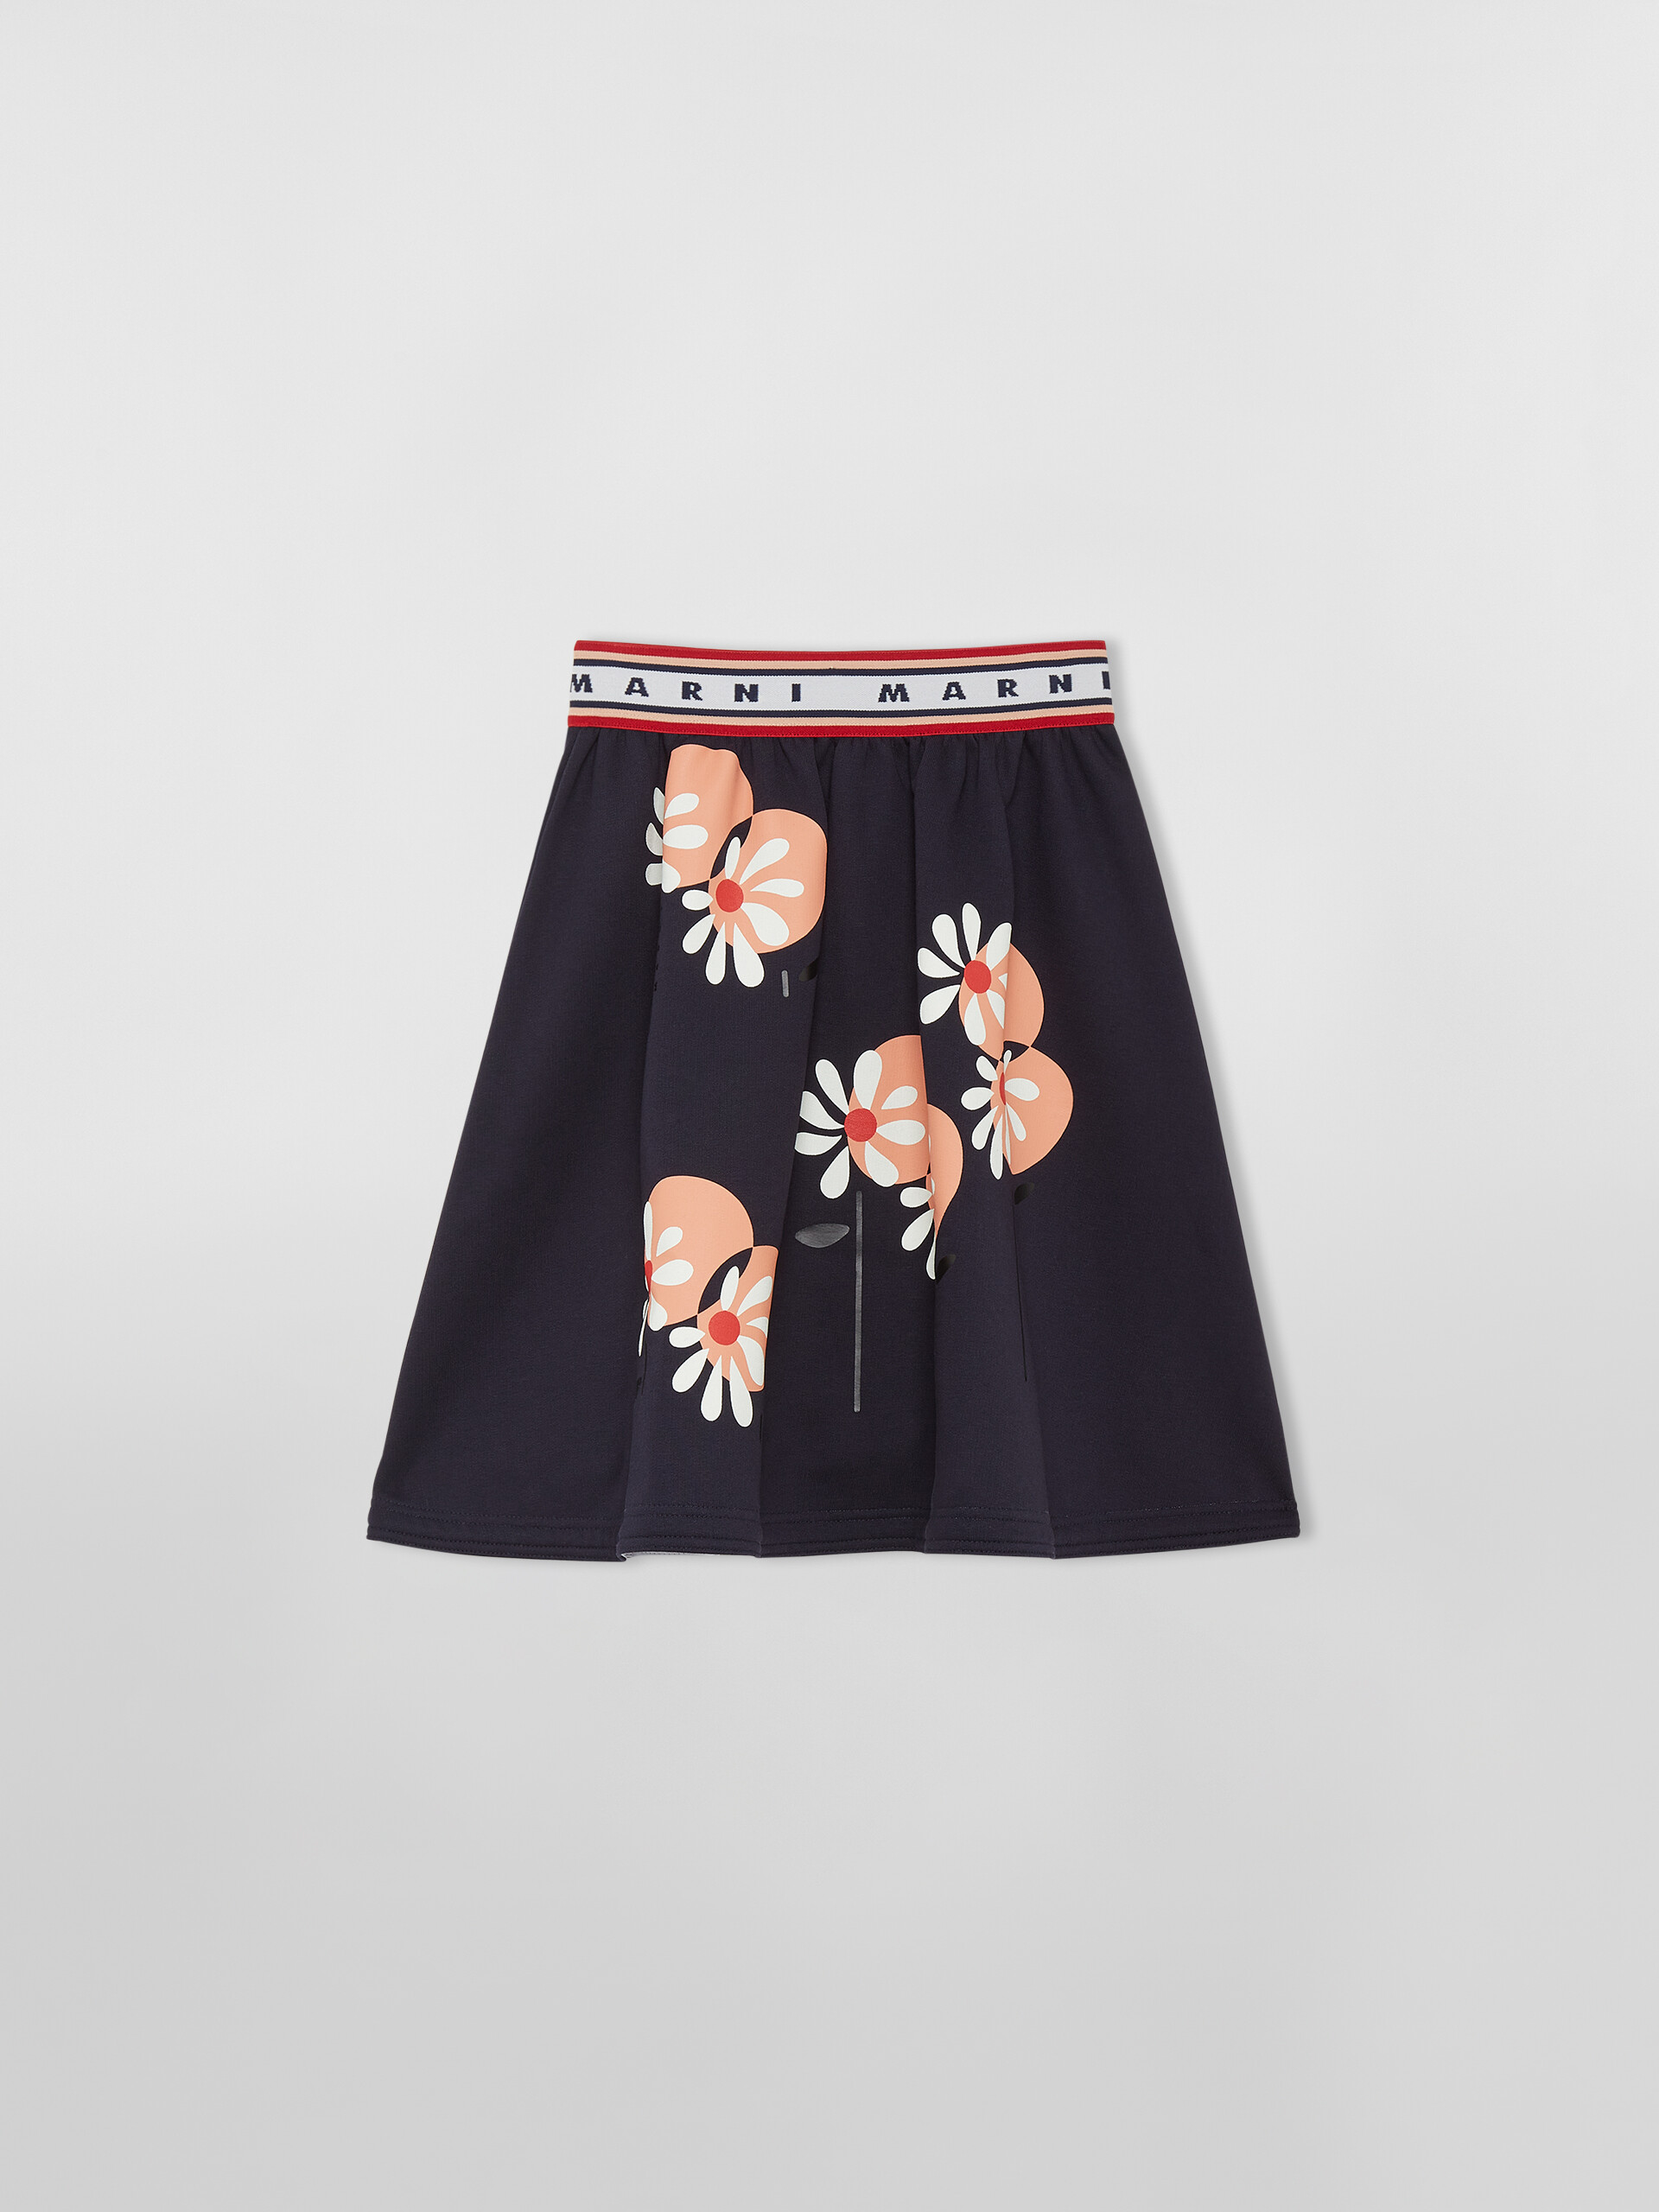 SKIRT WITH "BOLLO DAISY" PRINT - Skirts - Image 1